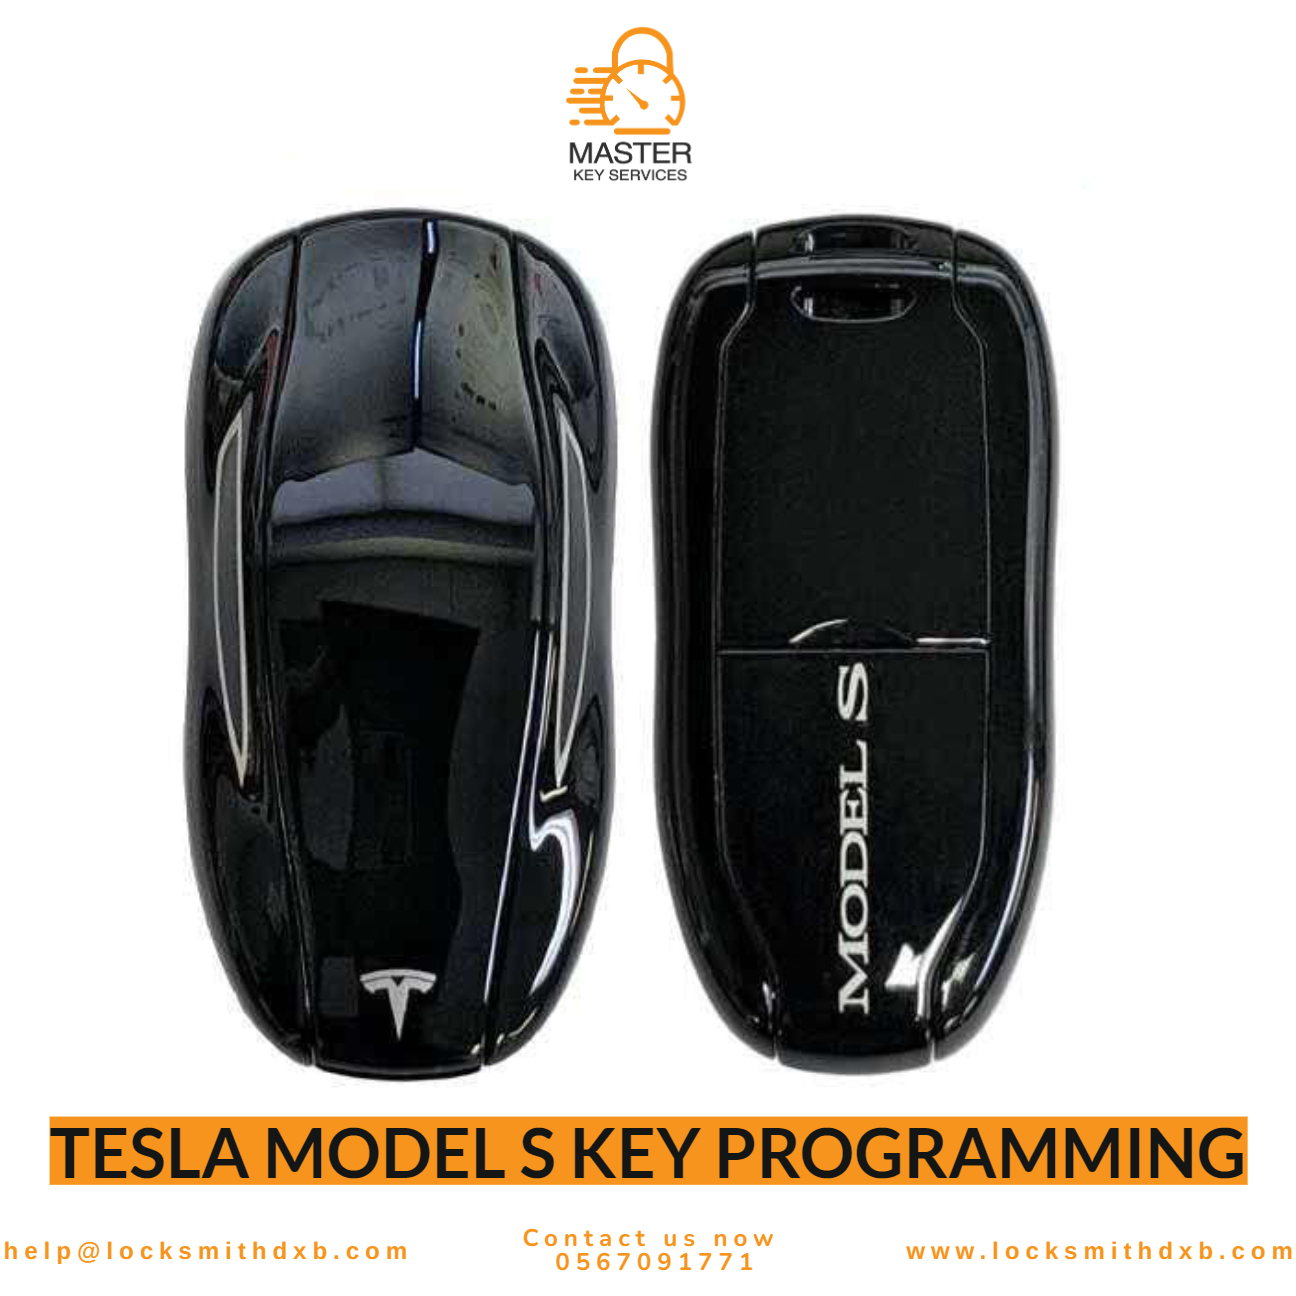 Tesla model s key programming